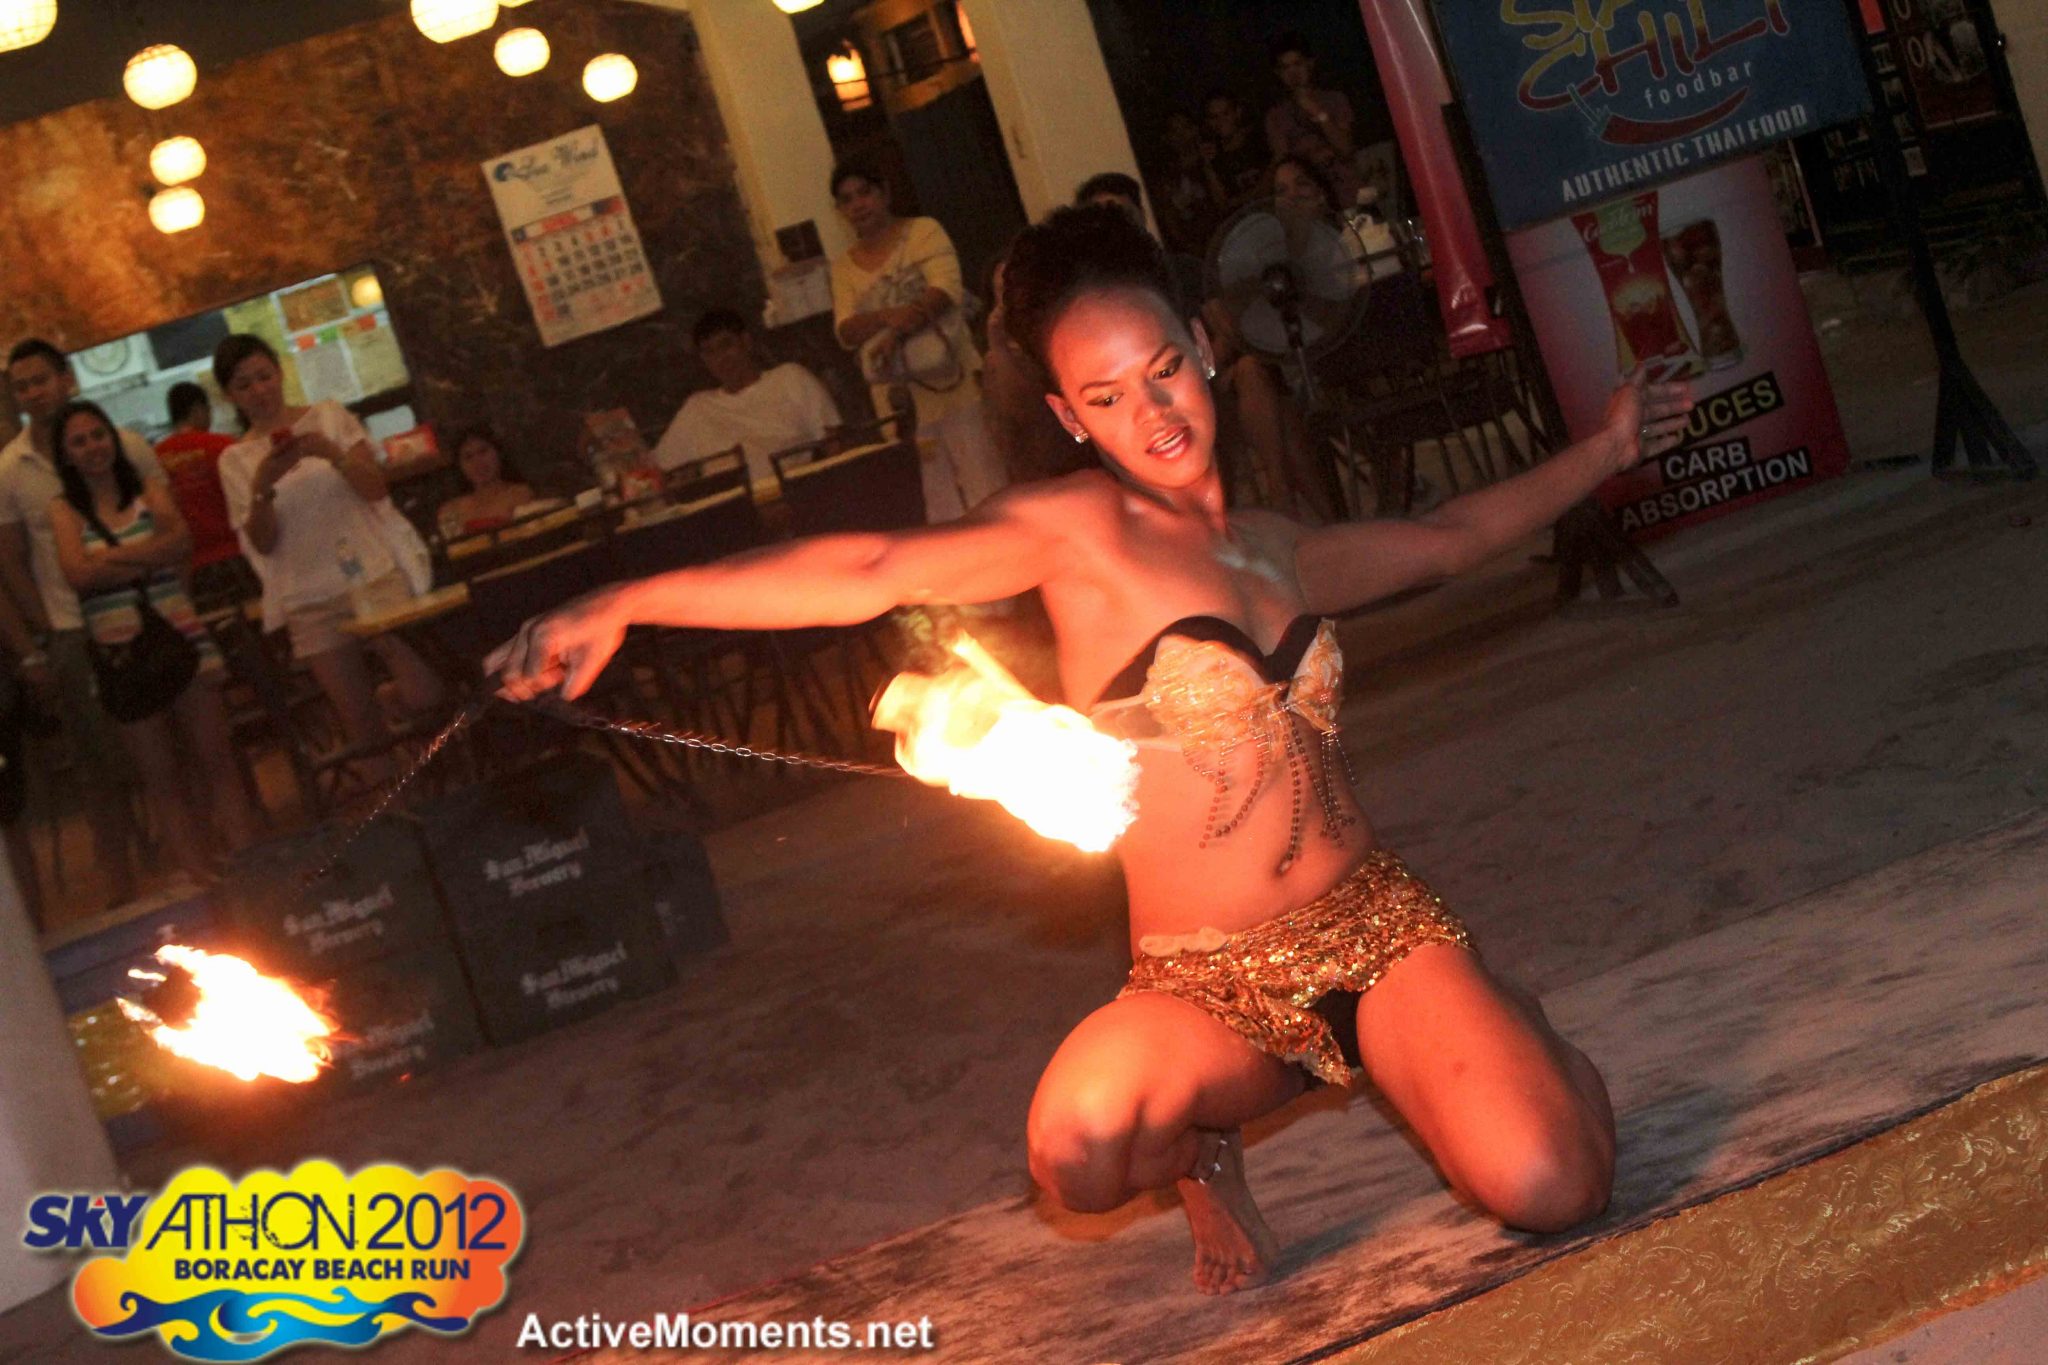 Skyathon 2012: Fire Dancer